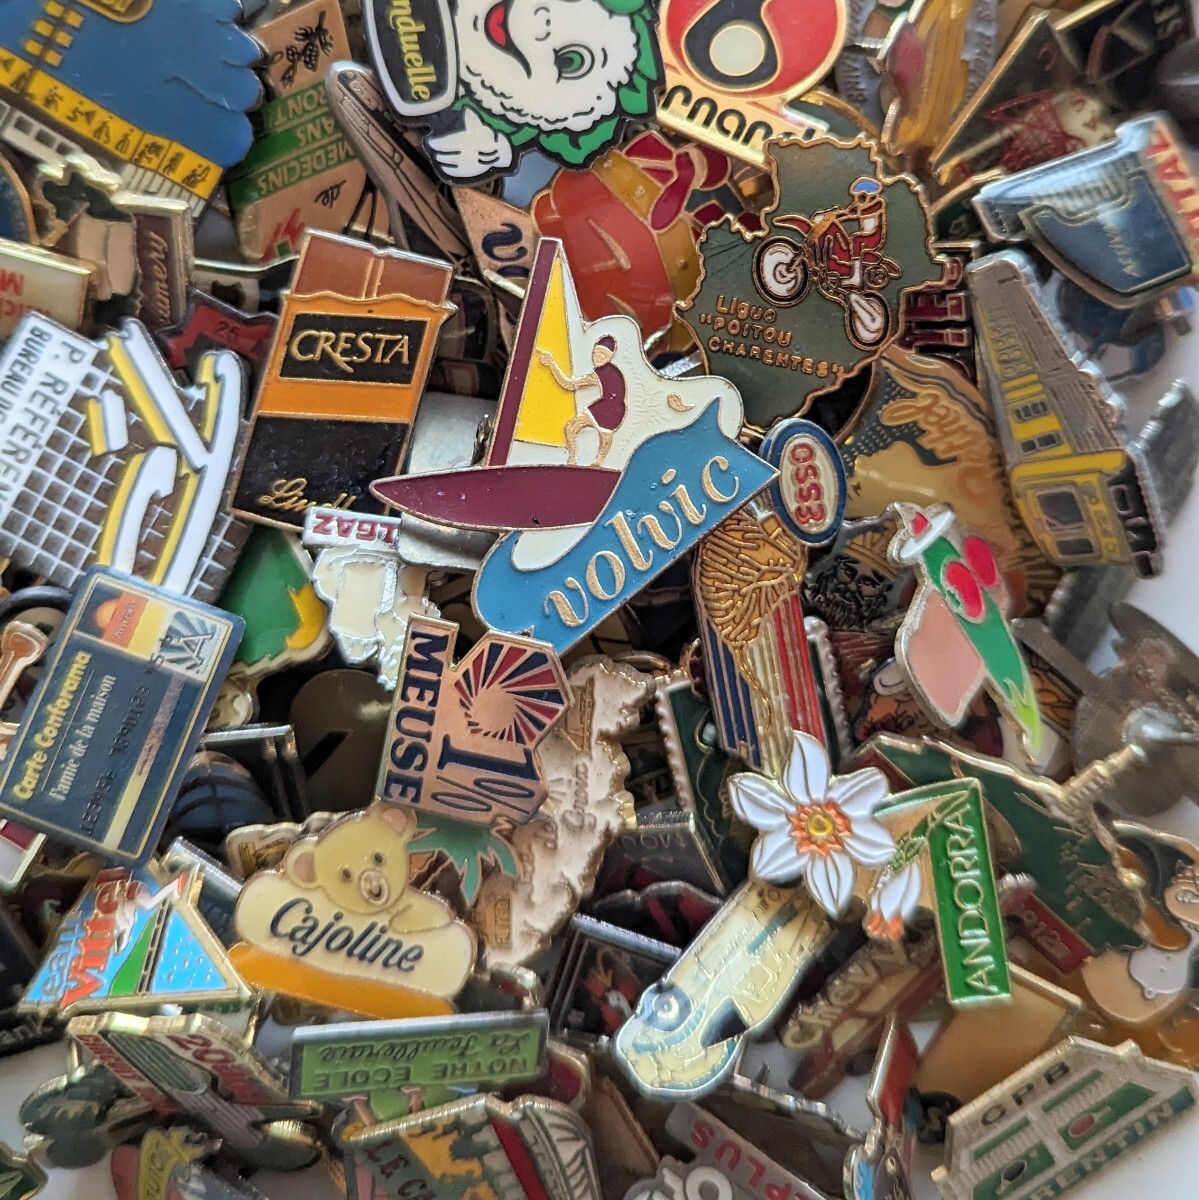  France miscellaneous goods * pin z pin badge large amount 300 piece set * Vintage set sale *BDA2406